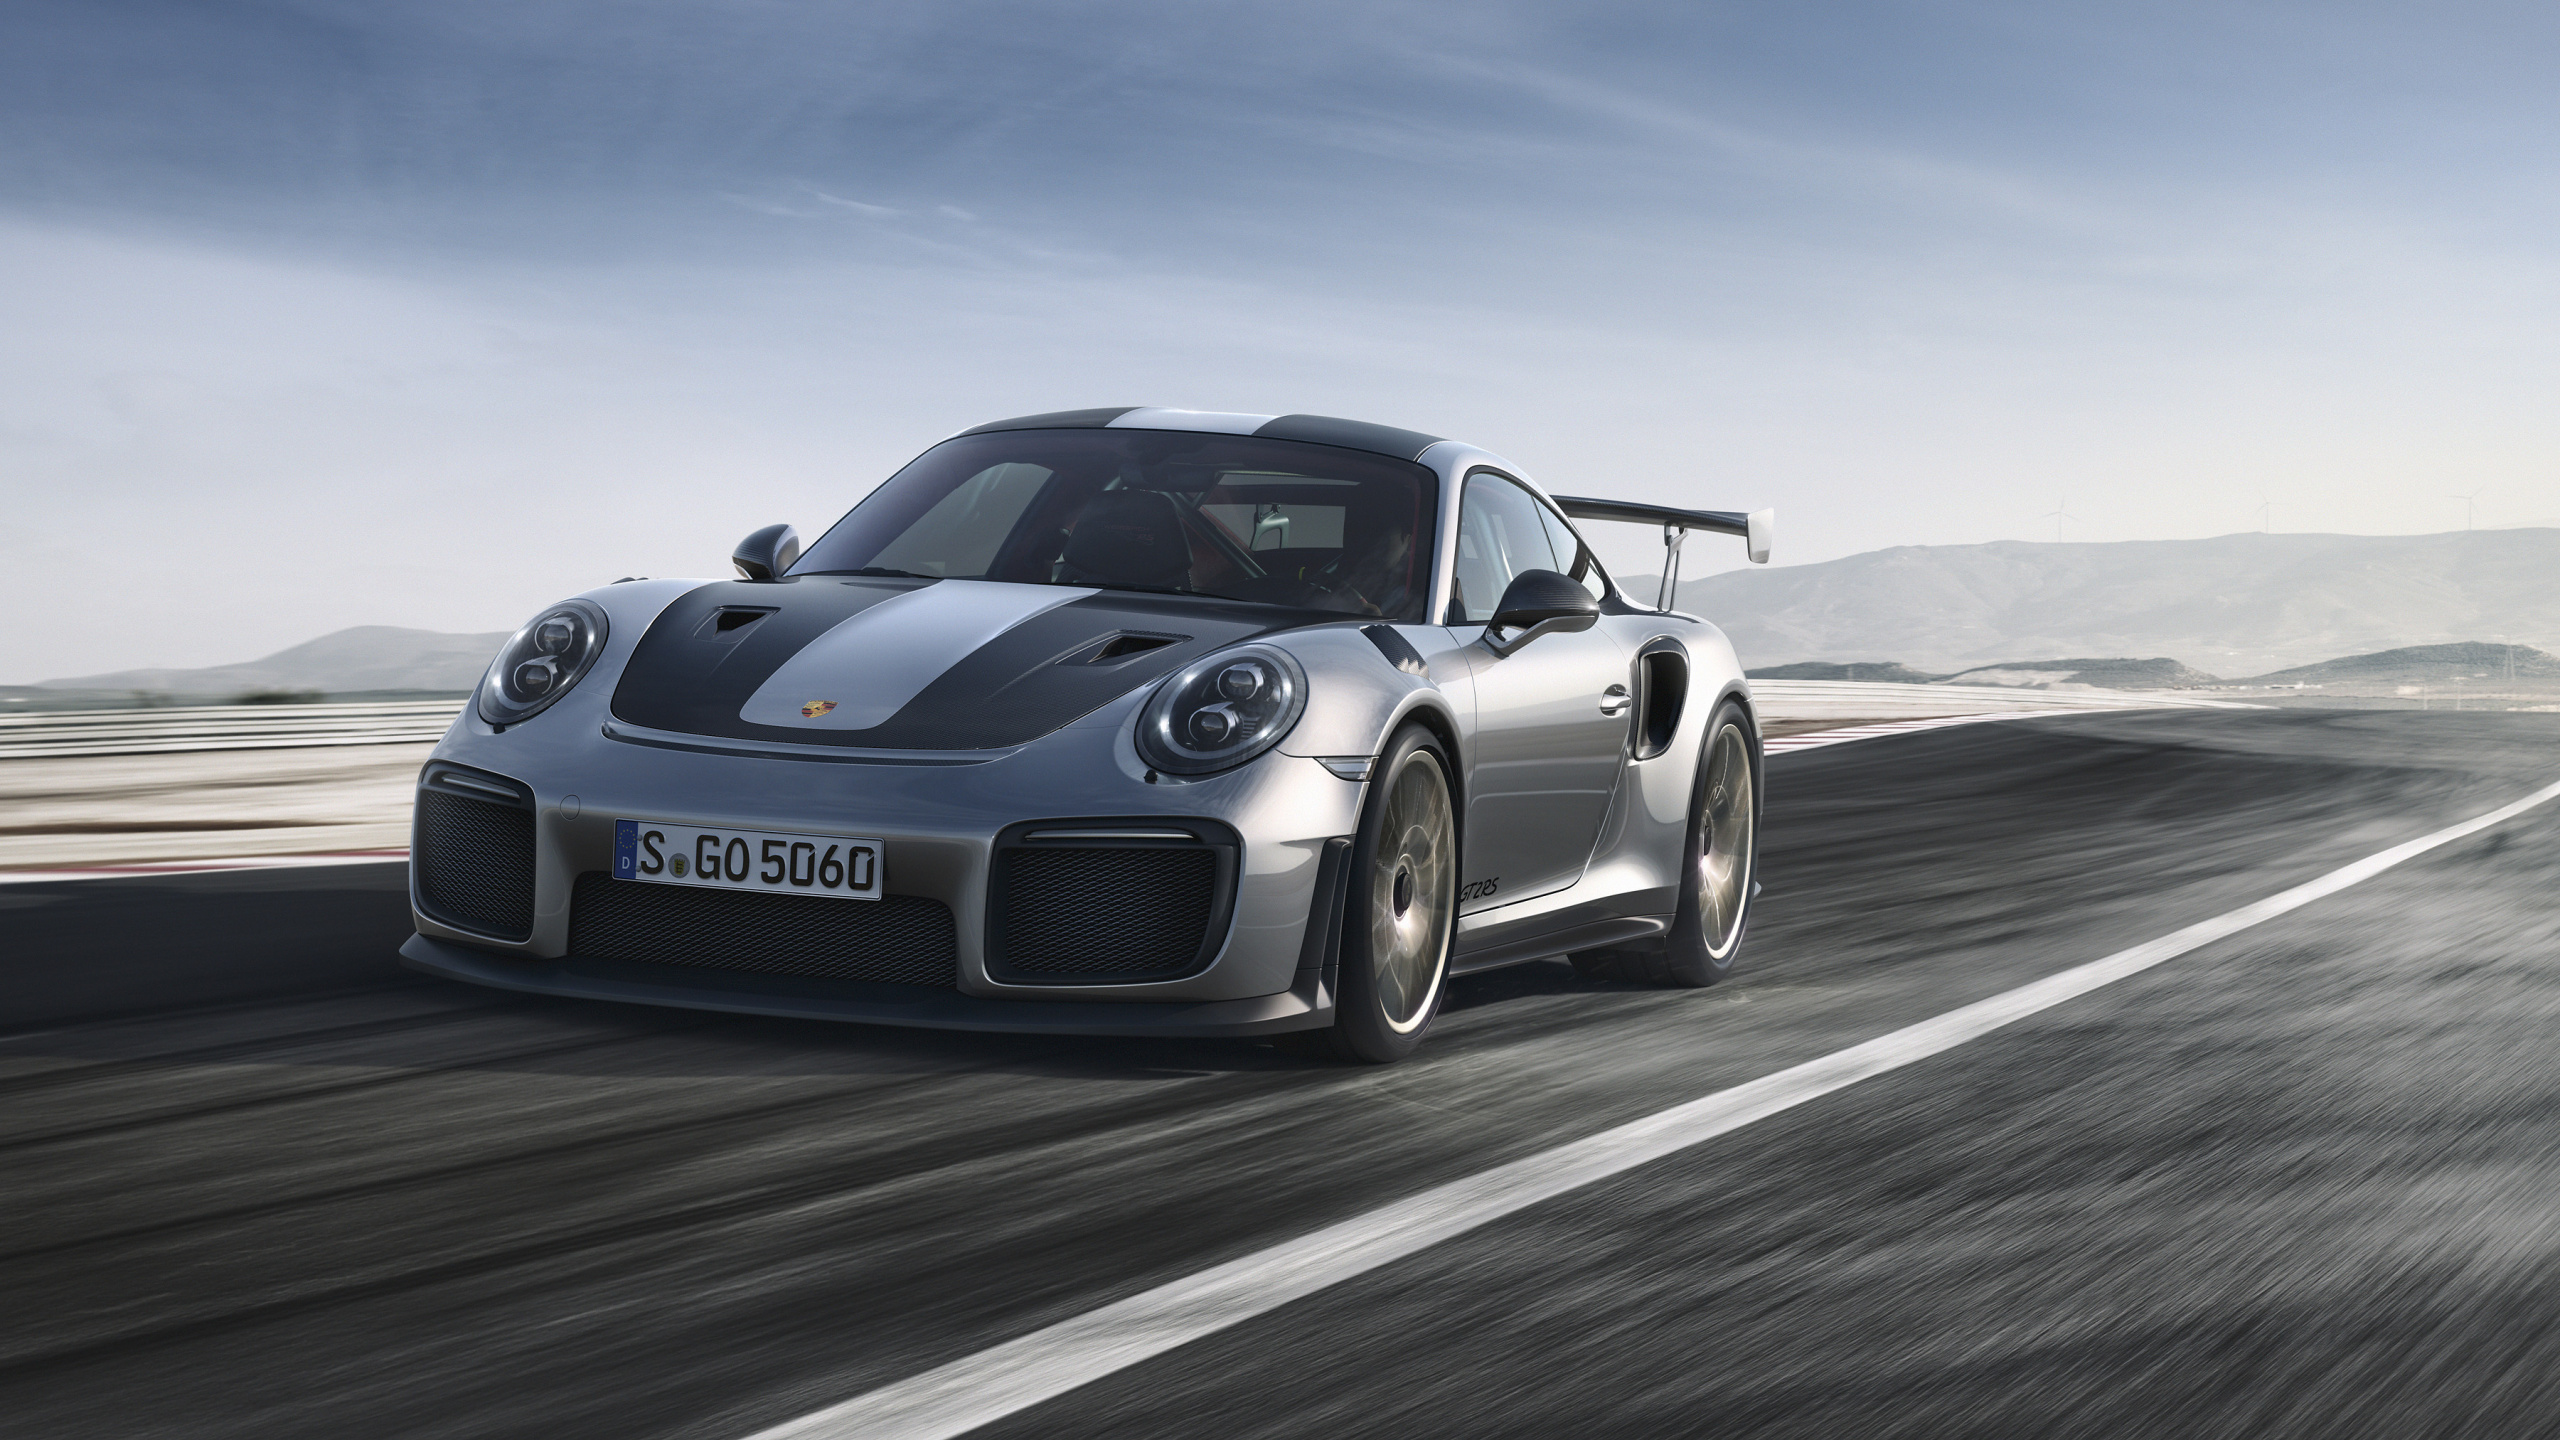 Porsche 911 Negro en la Carretera. Wallpaper in 2560x1440 Resolution